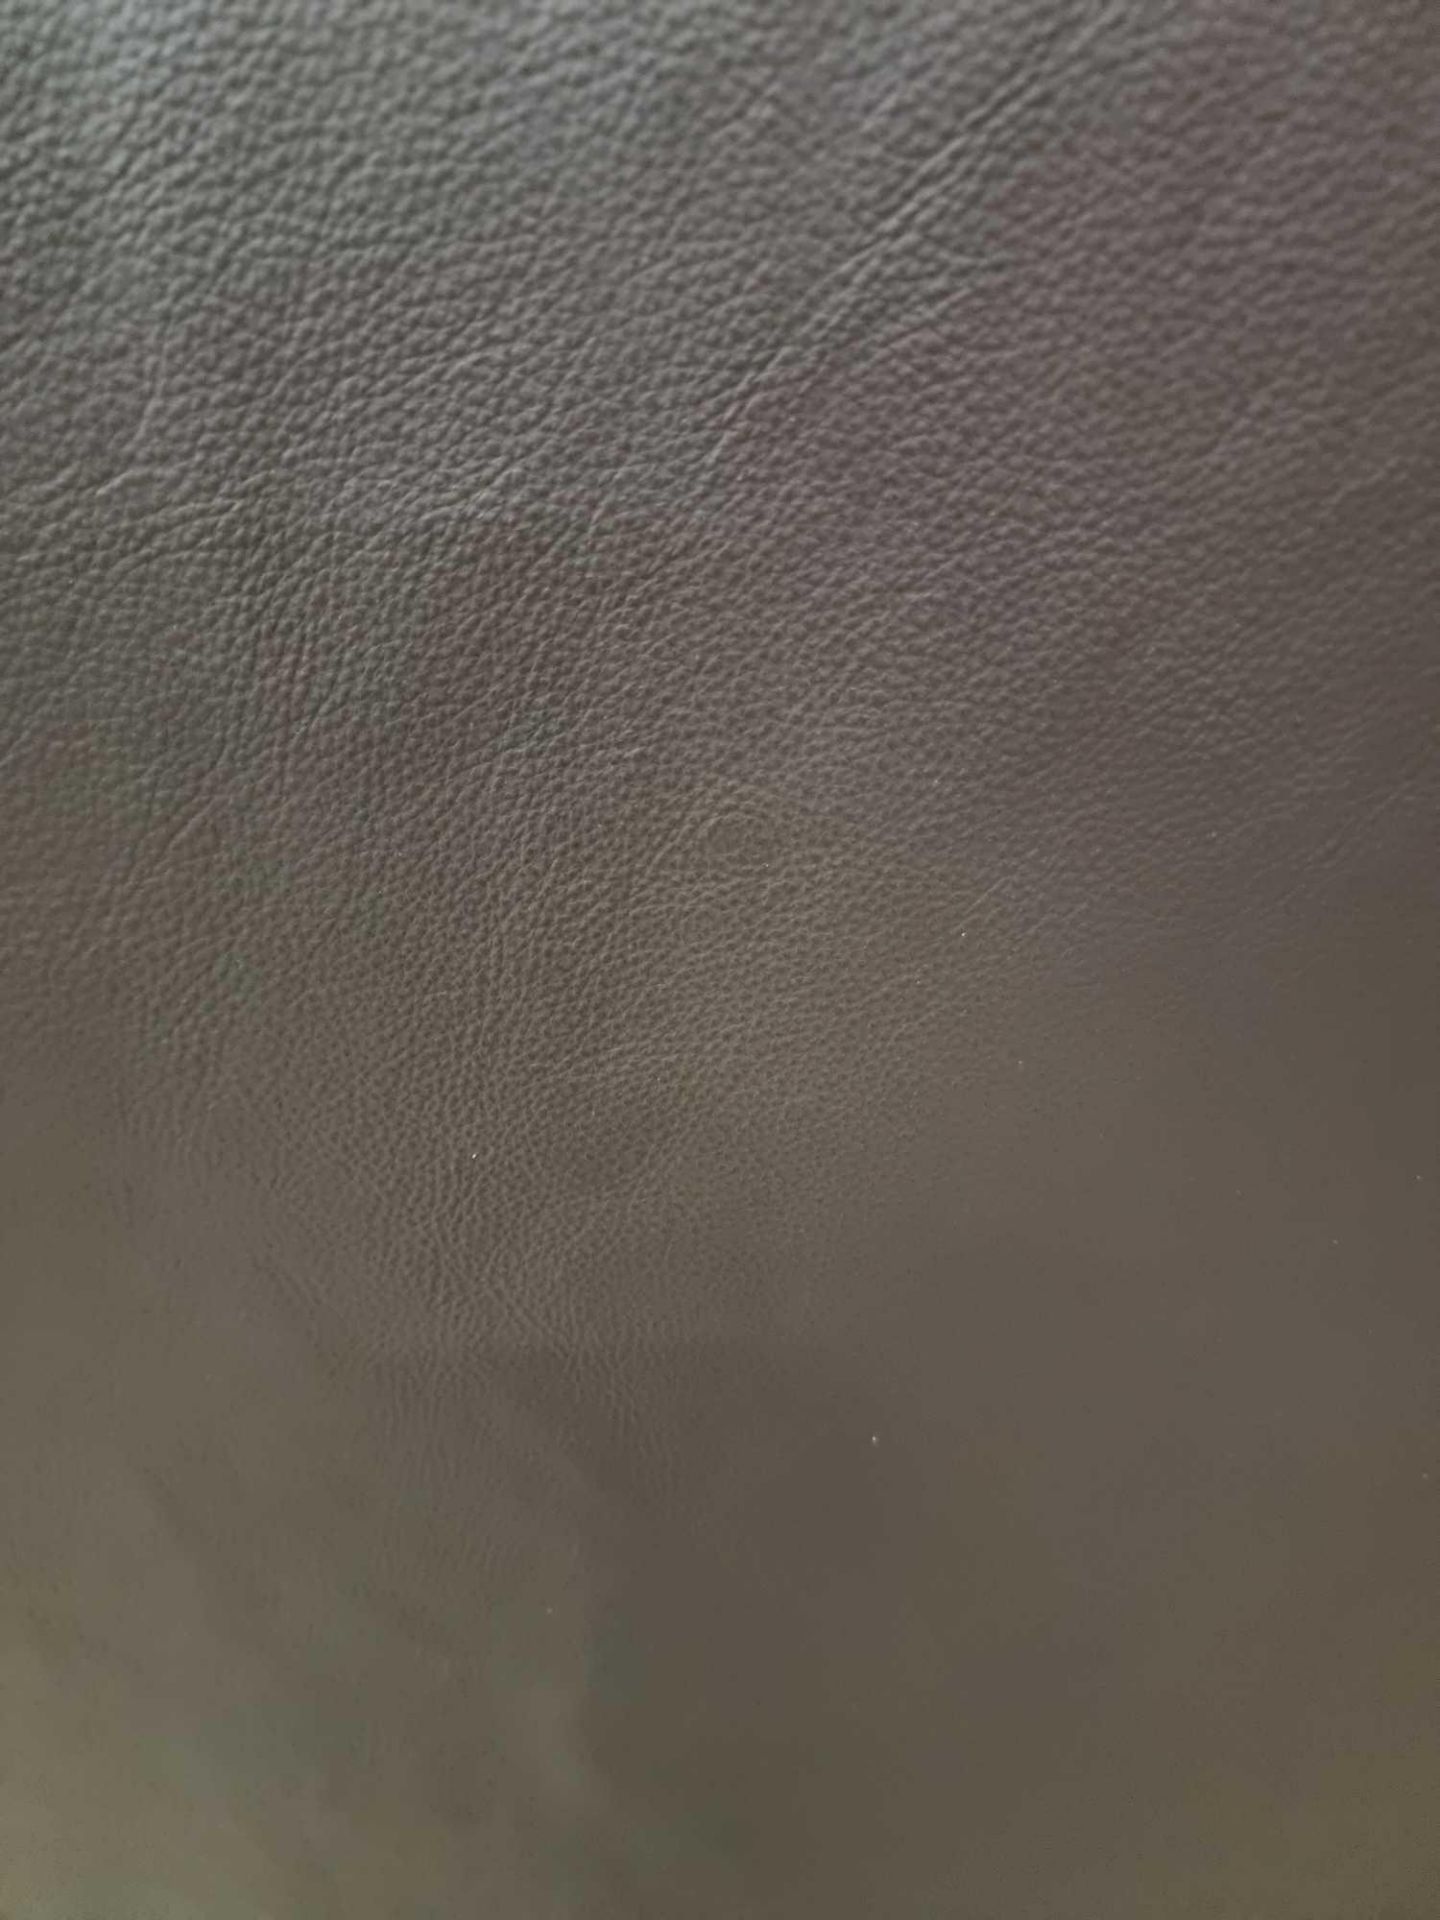 Yarwood Hammersmith Chocolate Leather Hide approximately 3.84mÂ² 2.4 x 1.6cm - Bild 2 aus 2